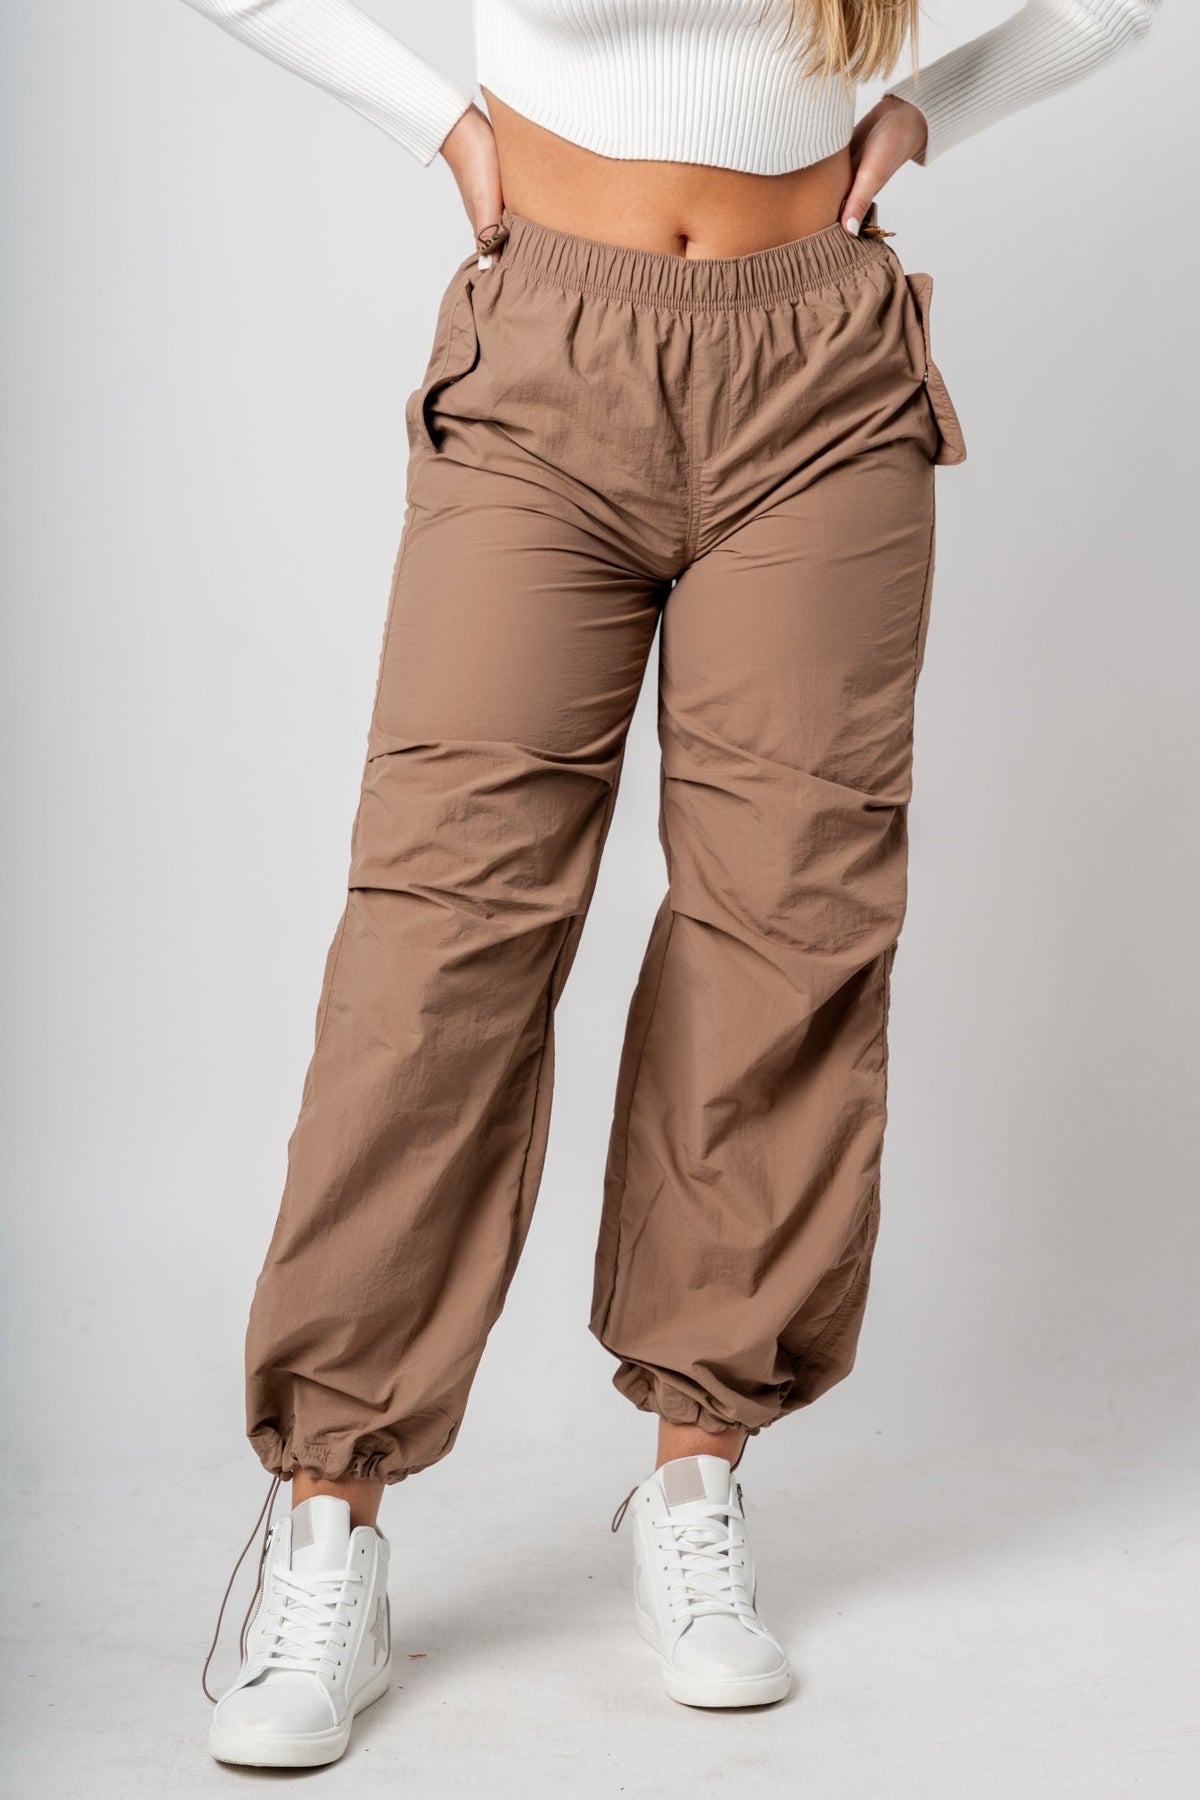 MAWCLOS Women Bottoms Drawstring Cargo Pant Solid Color Pants Boho